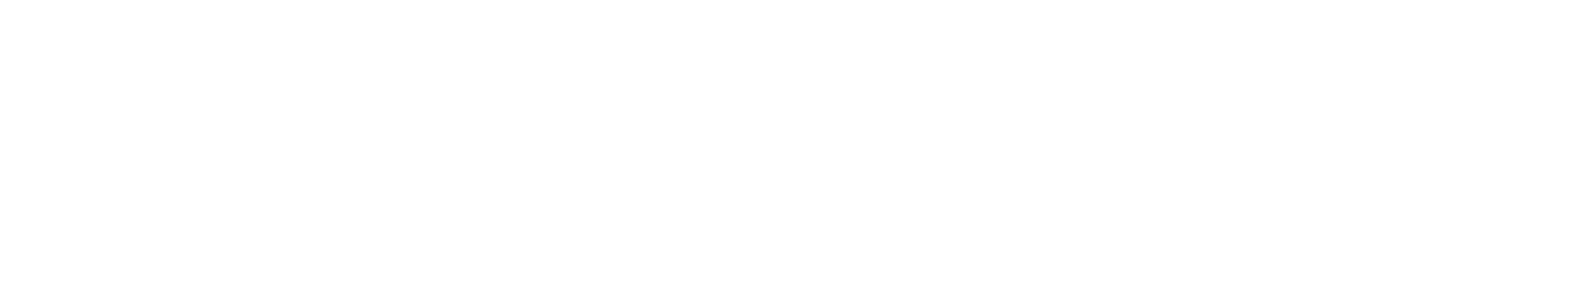 Flagstone Forward Living Logo